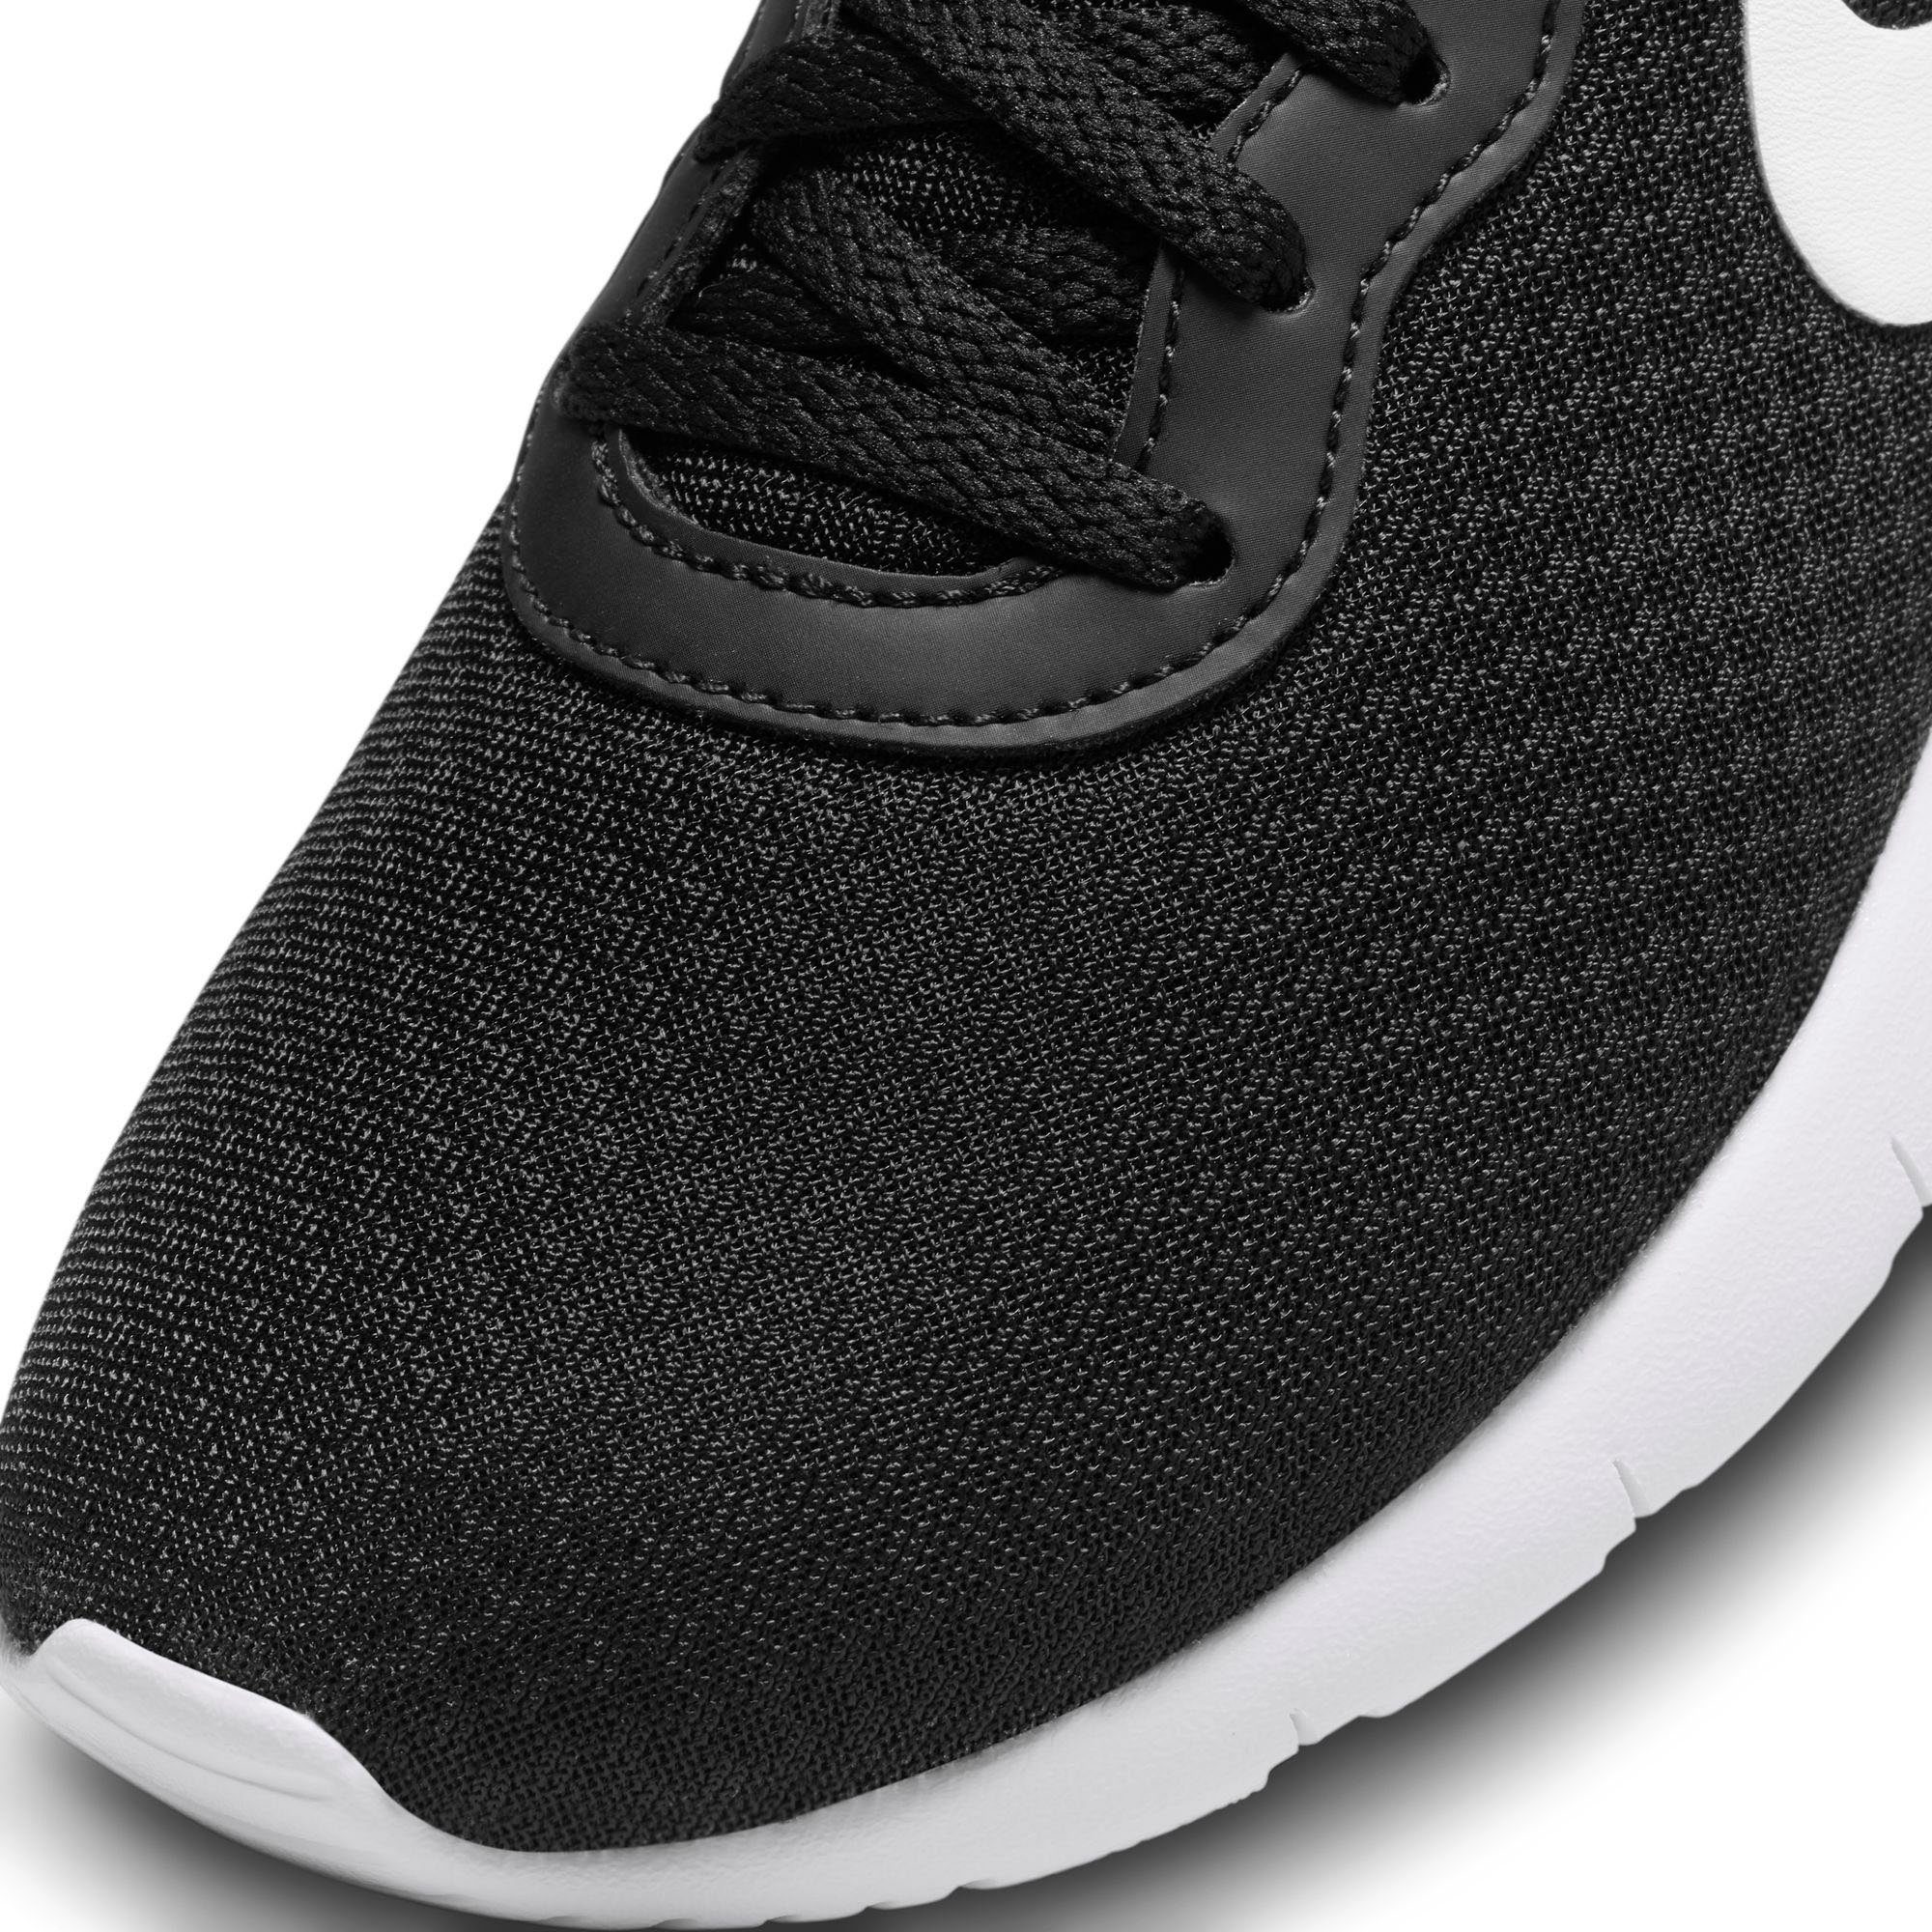 Nike GO (GS) TANJUN black/white Sneaker Sportswear